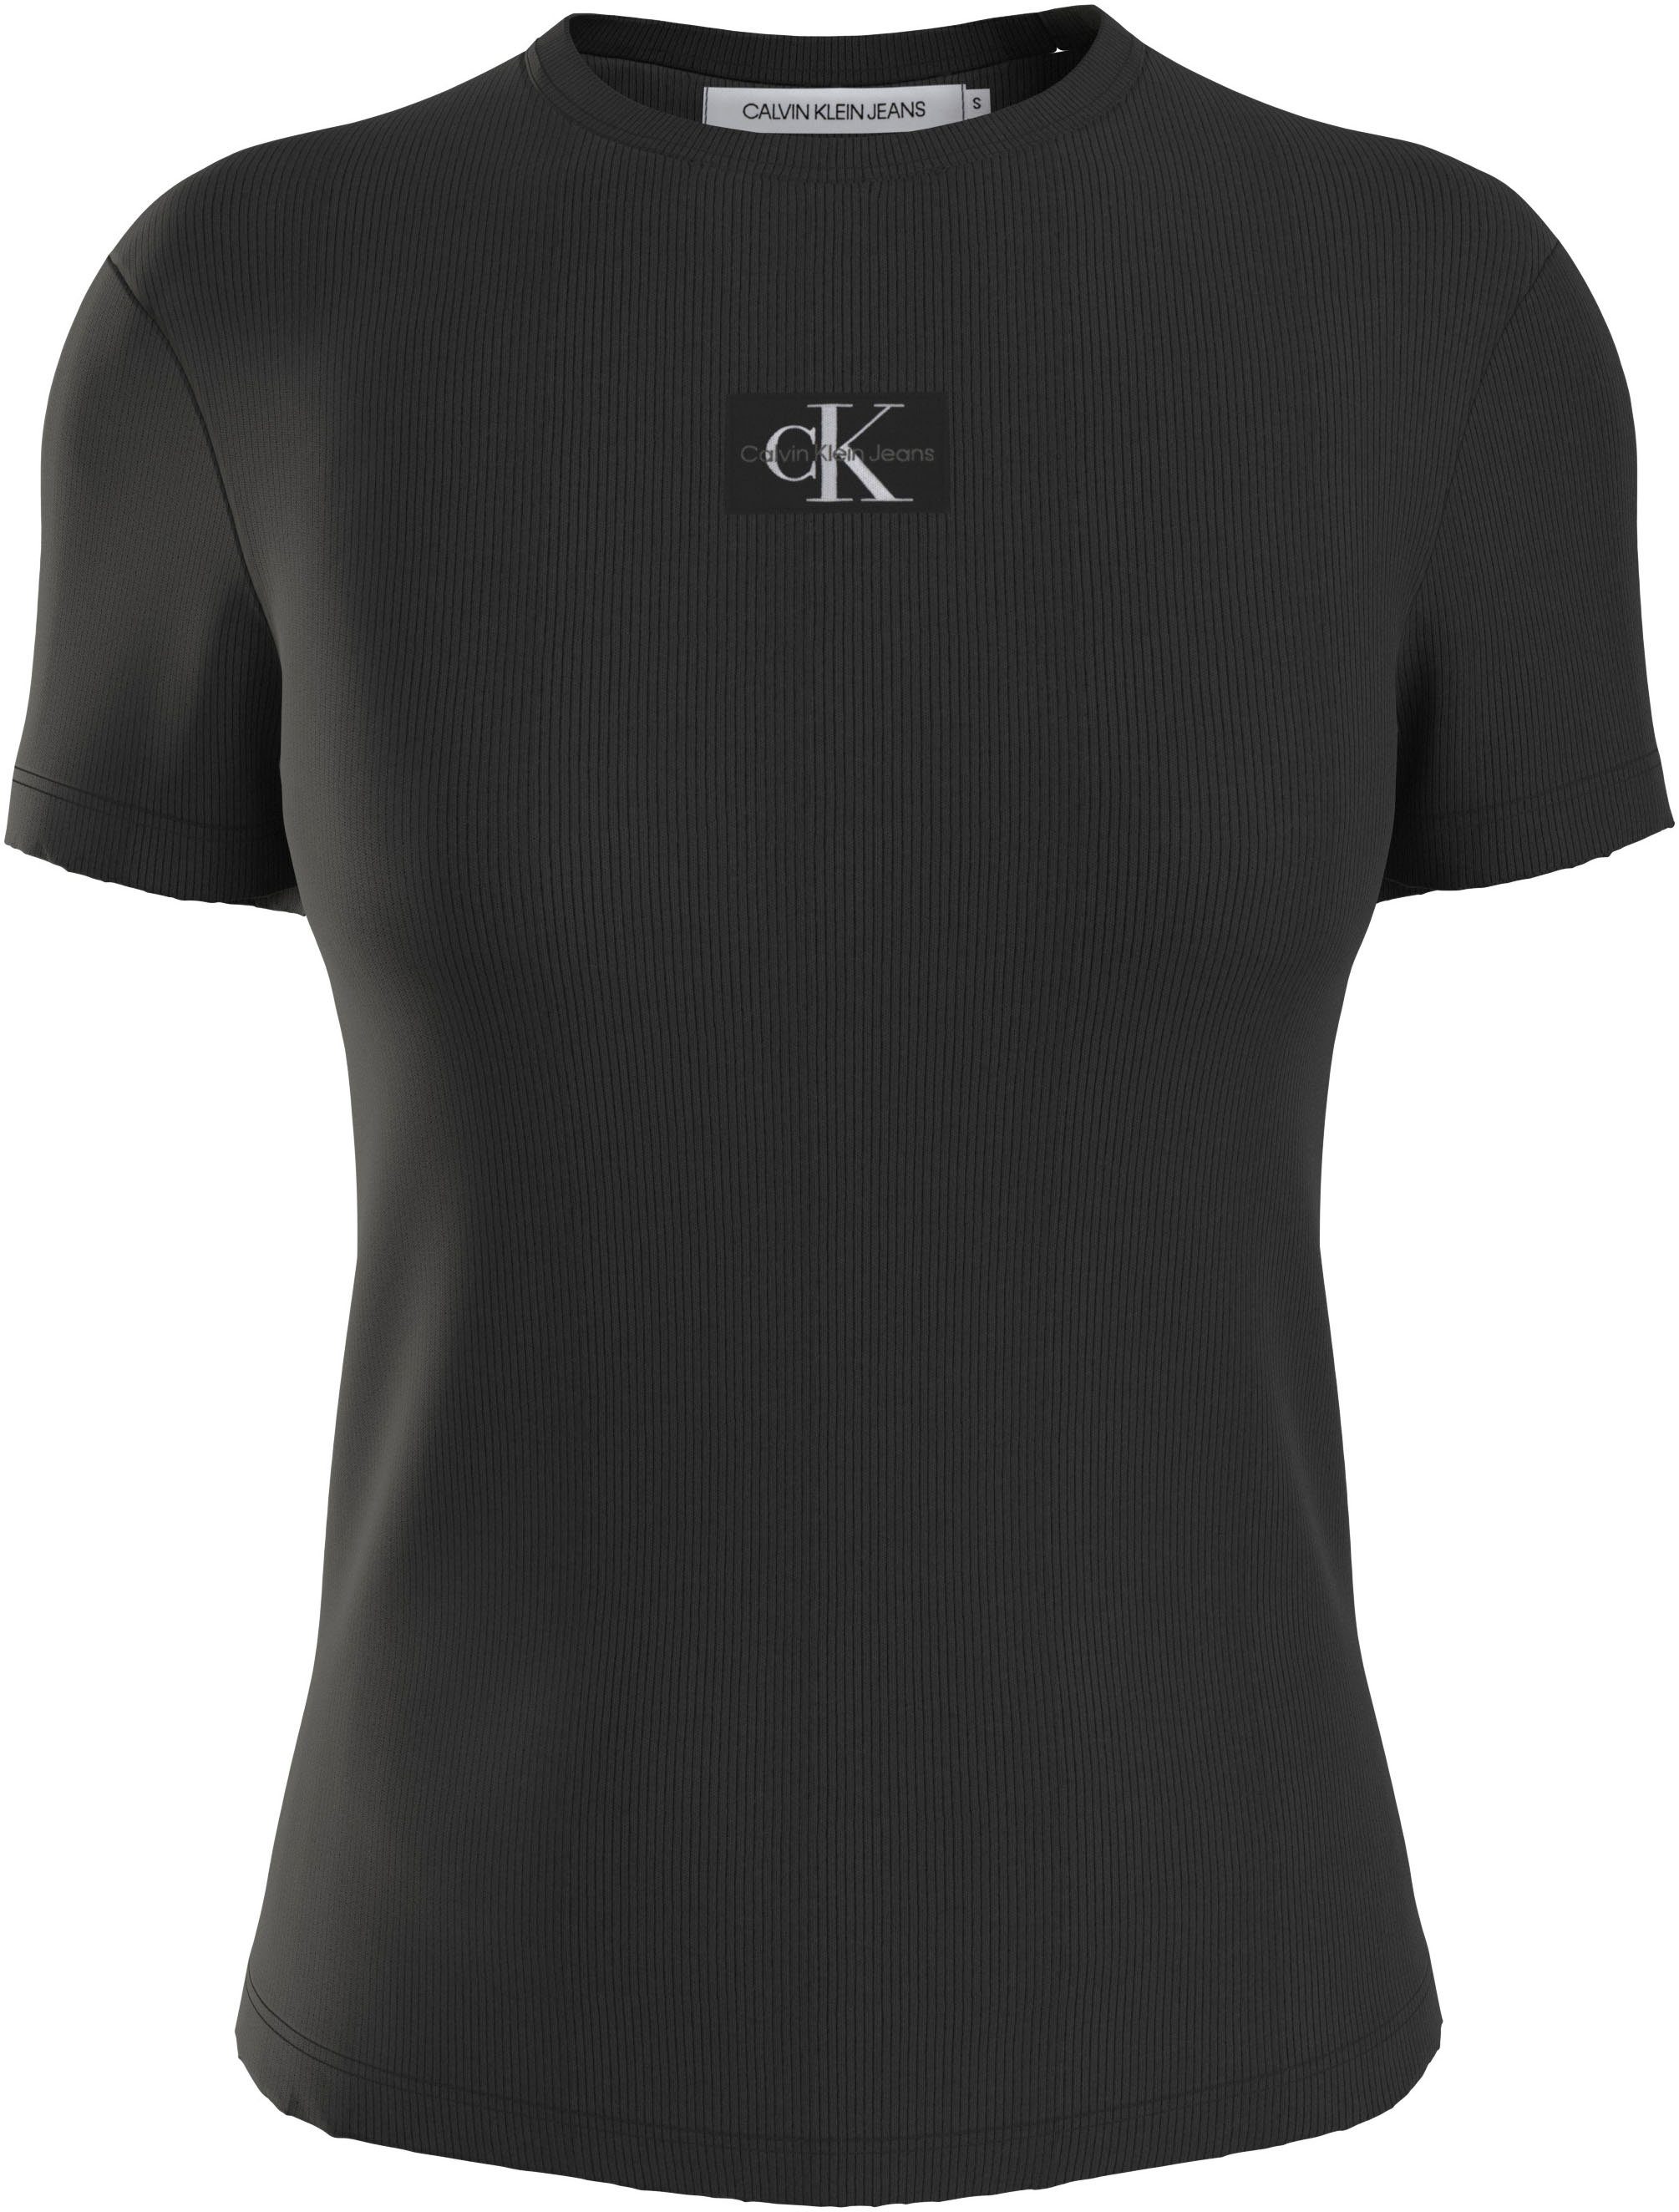 REGULAR Ck Jeans Black LABEL RIB WOVEN TEE T-Shirt Klein Calvin